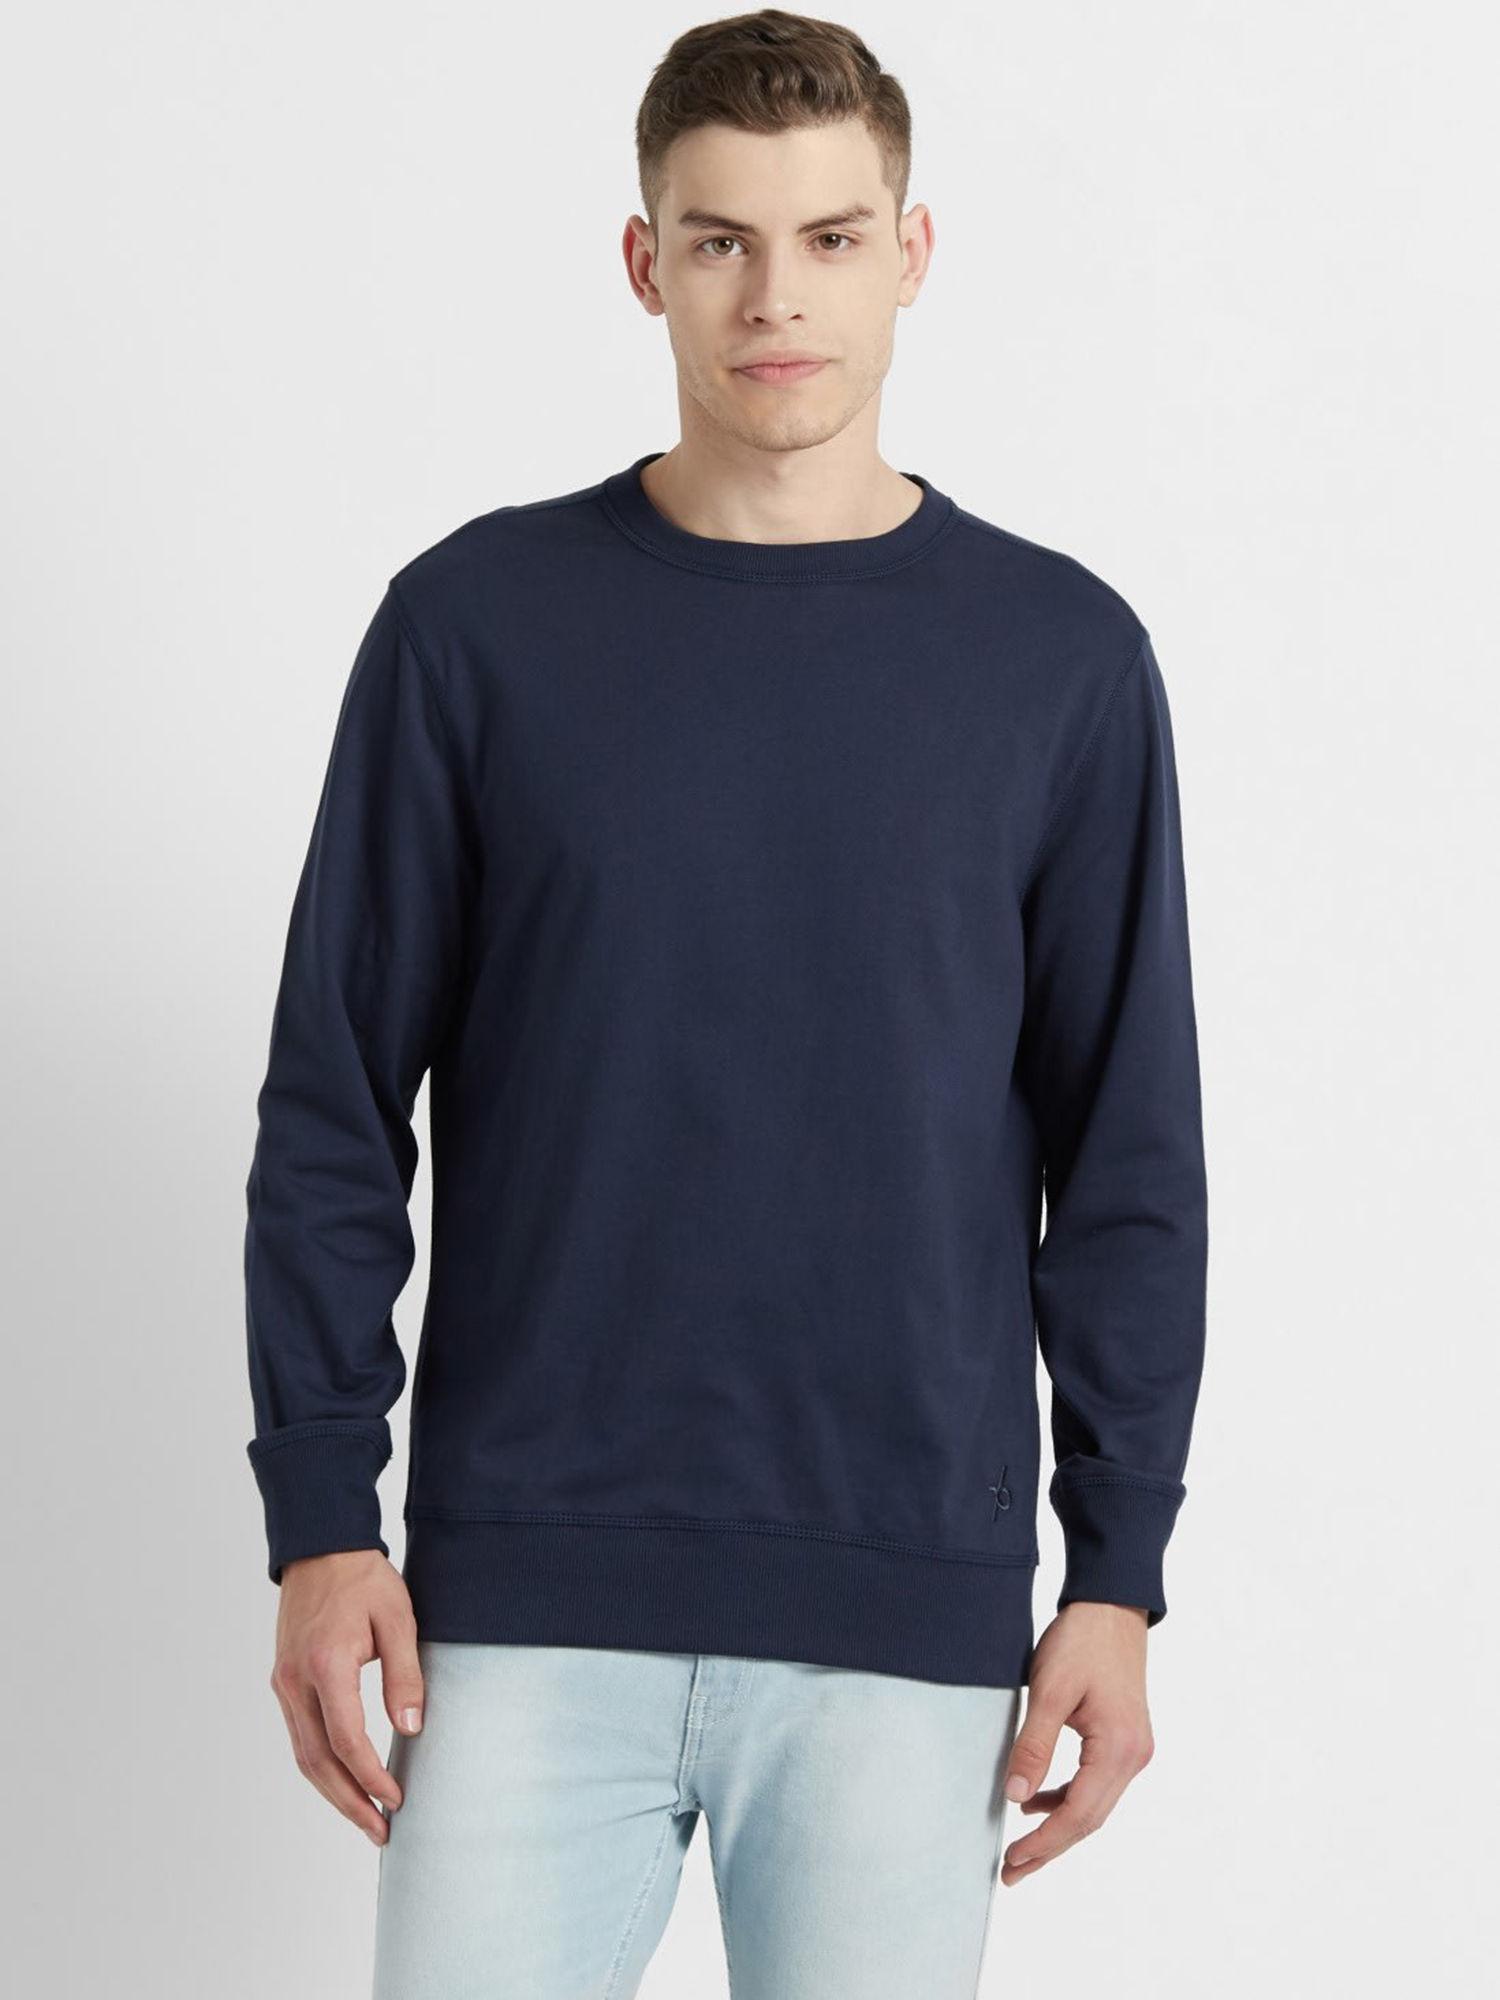 navy-blue-solid-sweatshirt